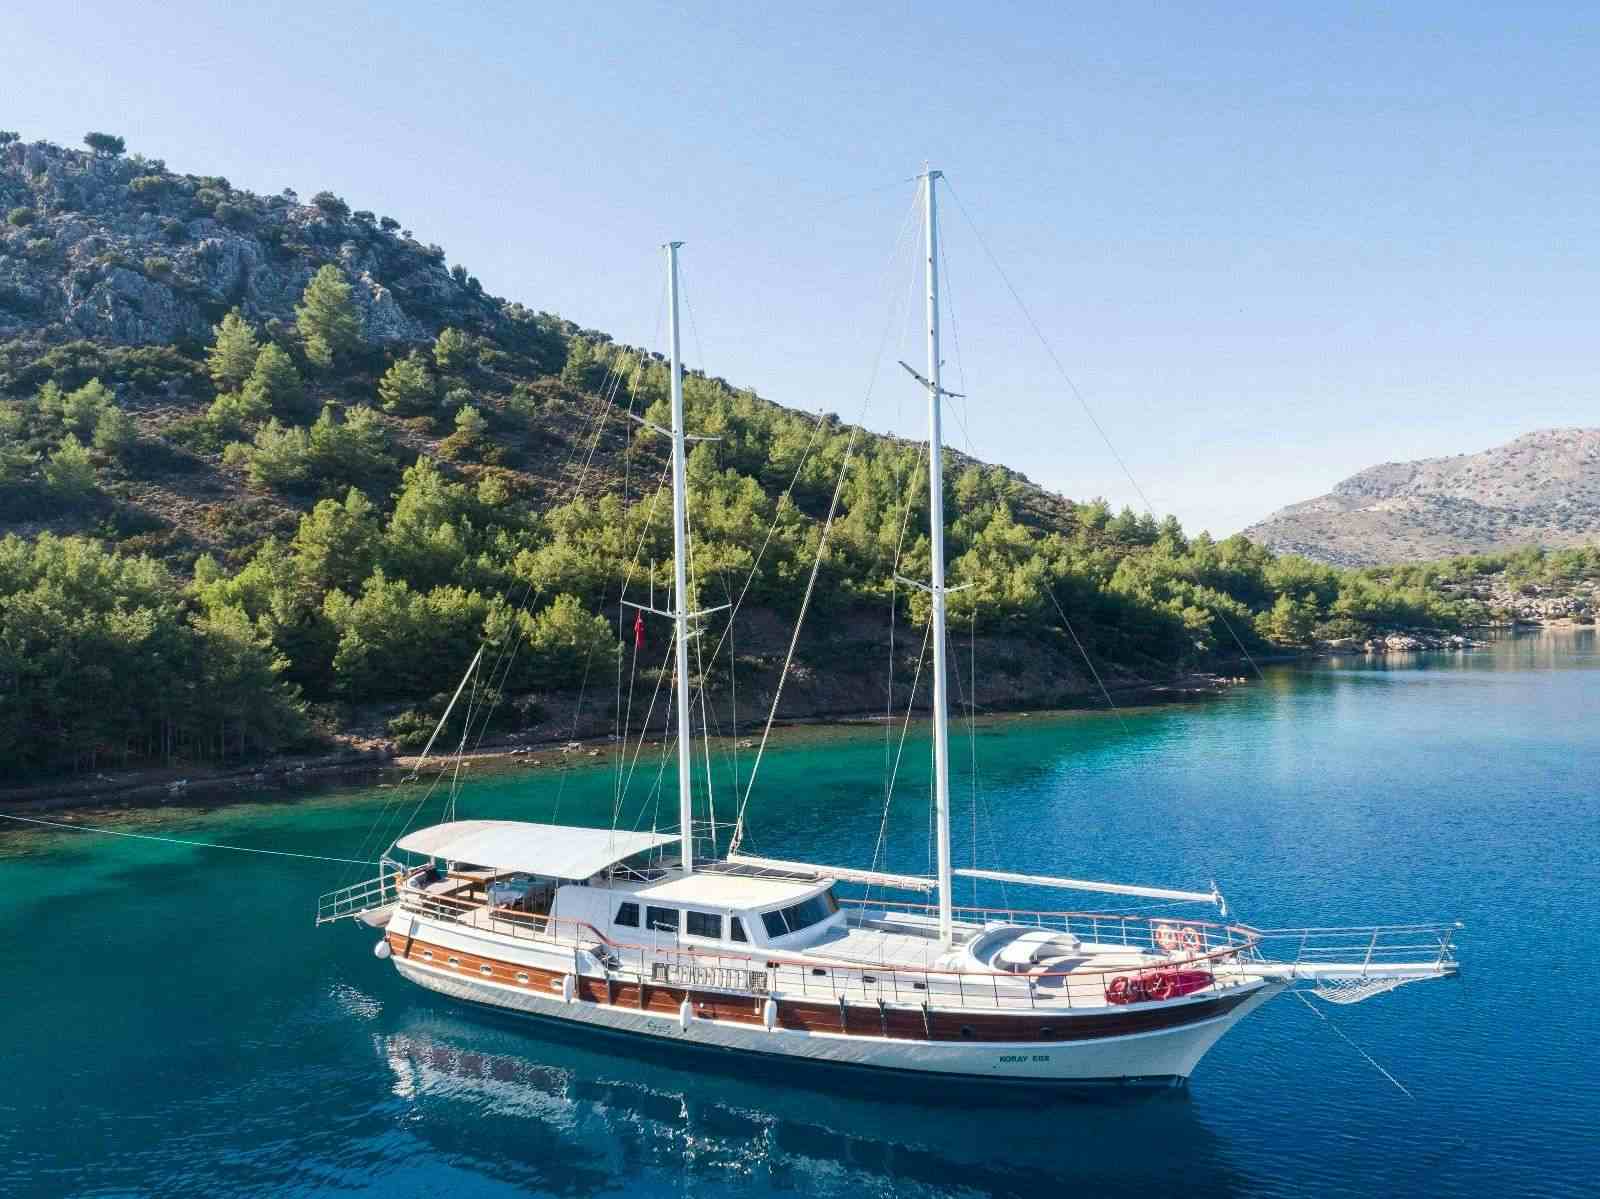 koray ege - Yacht Charter Porto Koufo & Boat hire in Greece & Turkey 1